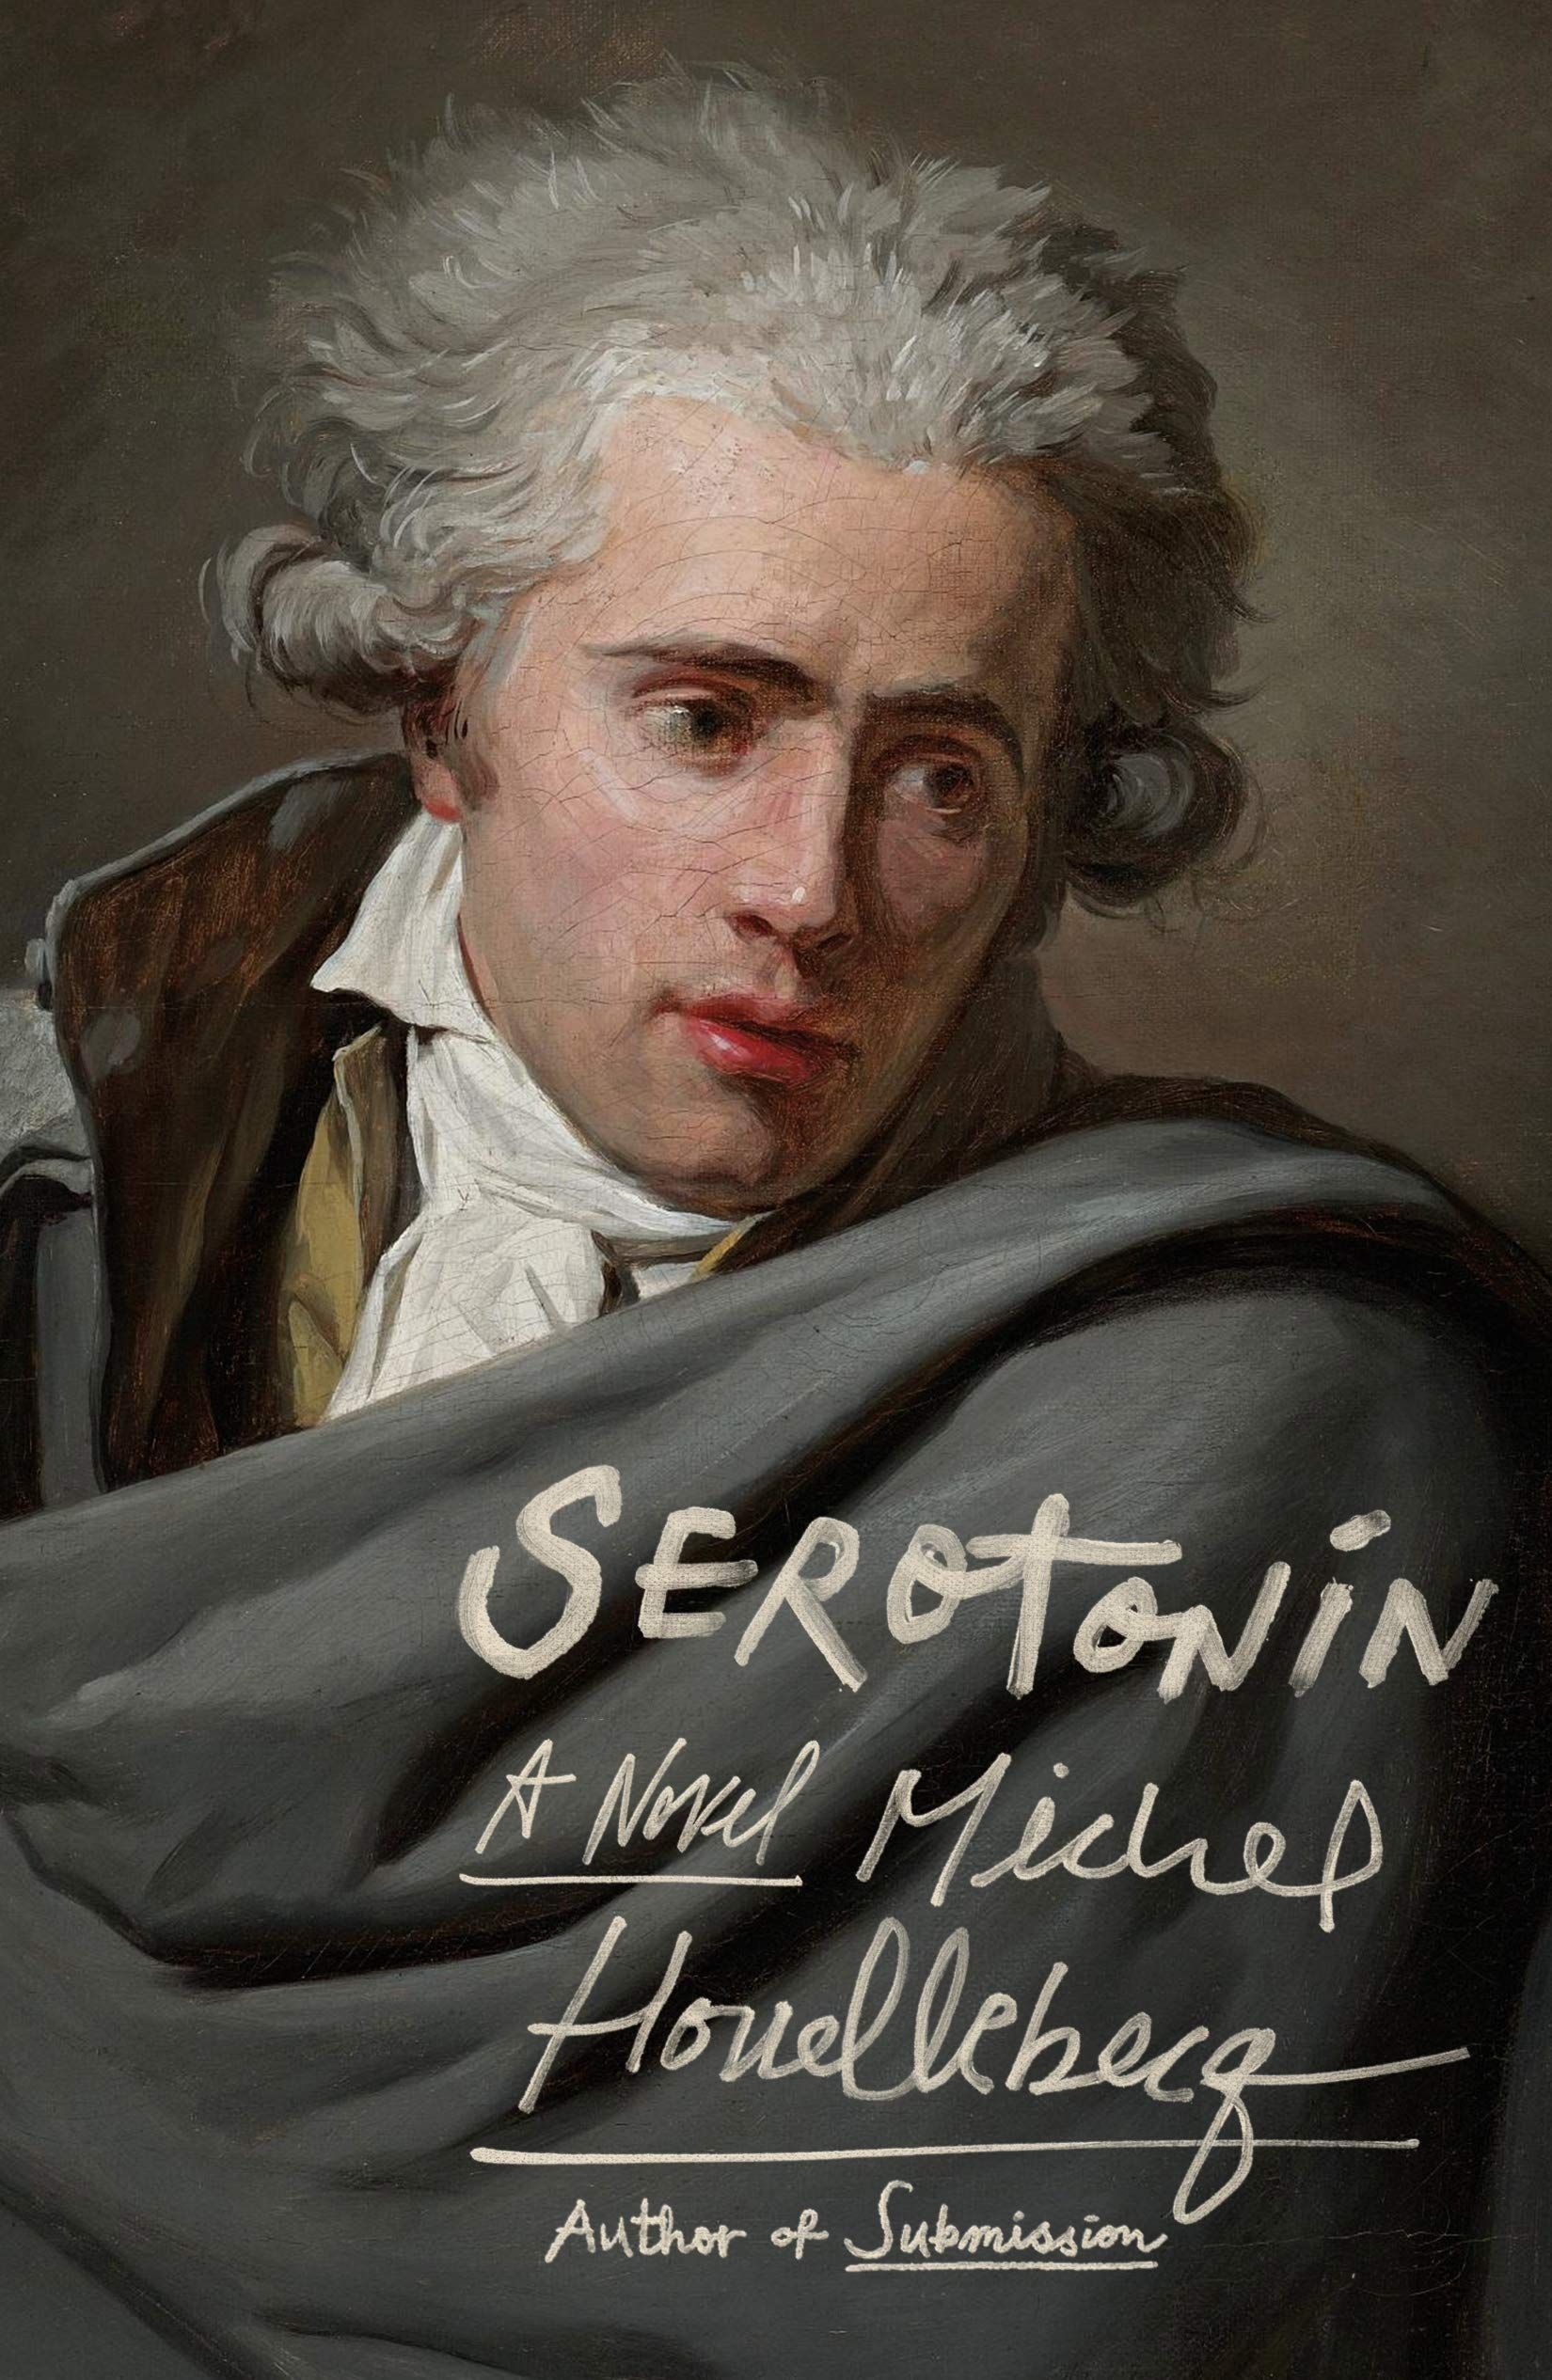 Lonely White Men: On Michel Houellebecq’s “Serotonin”